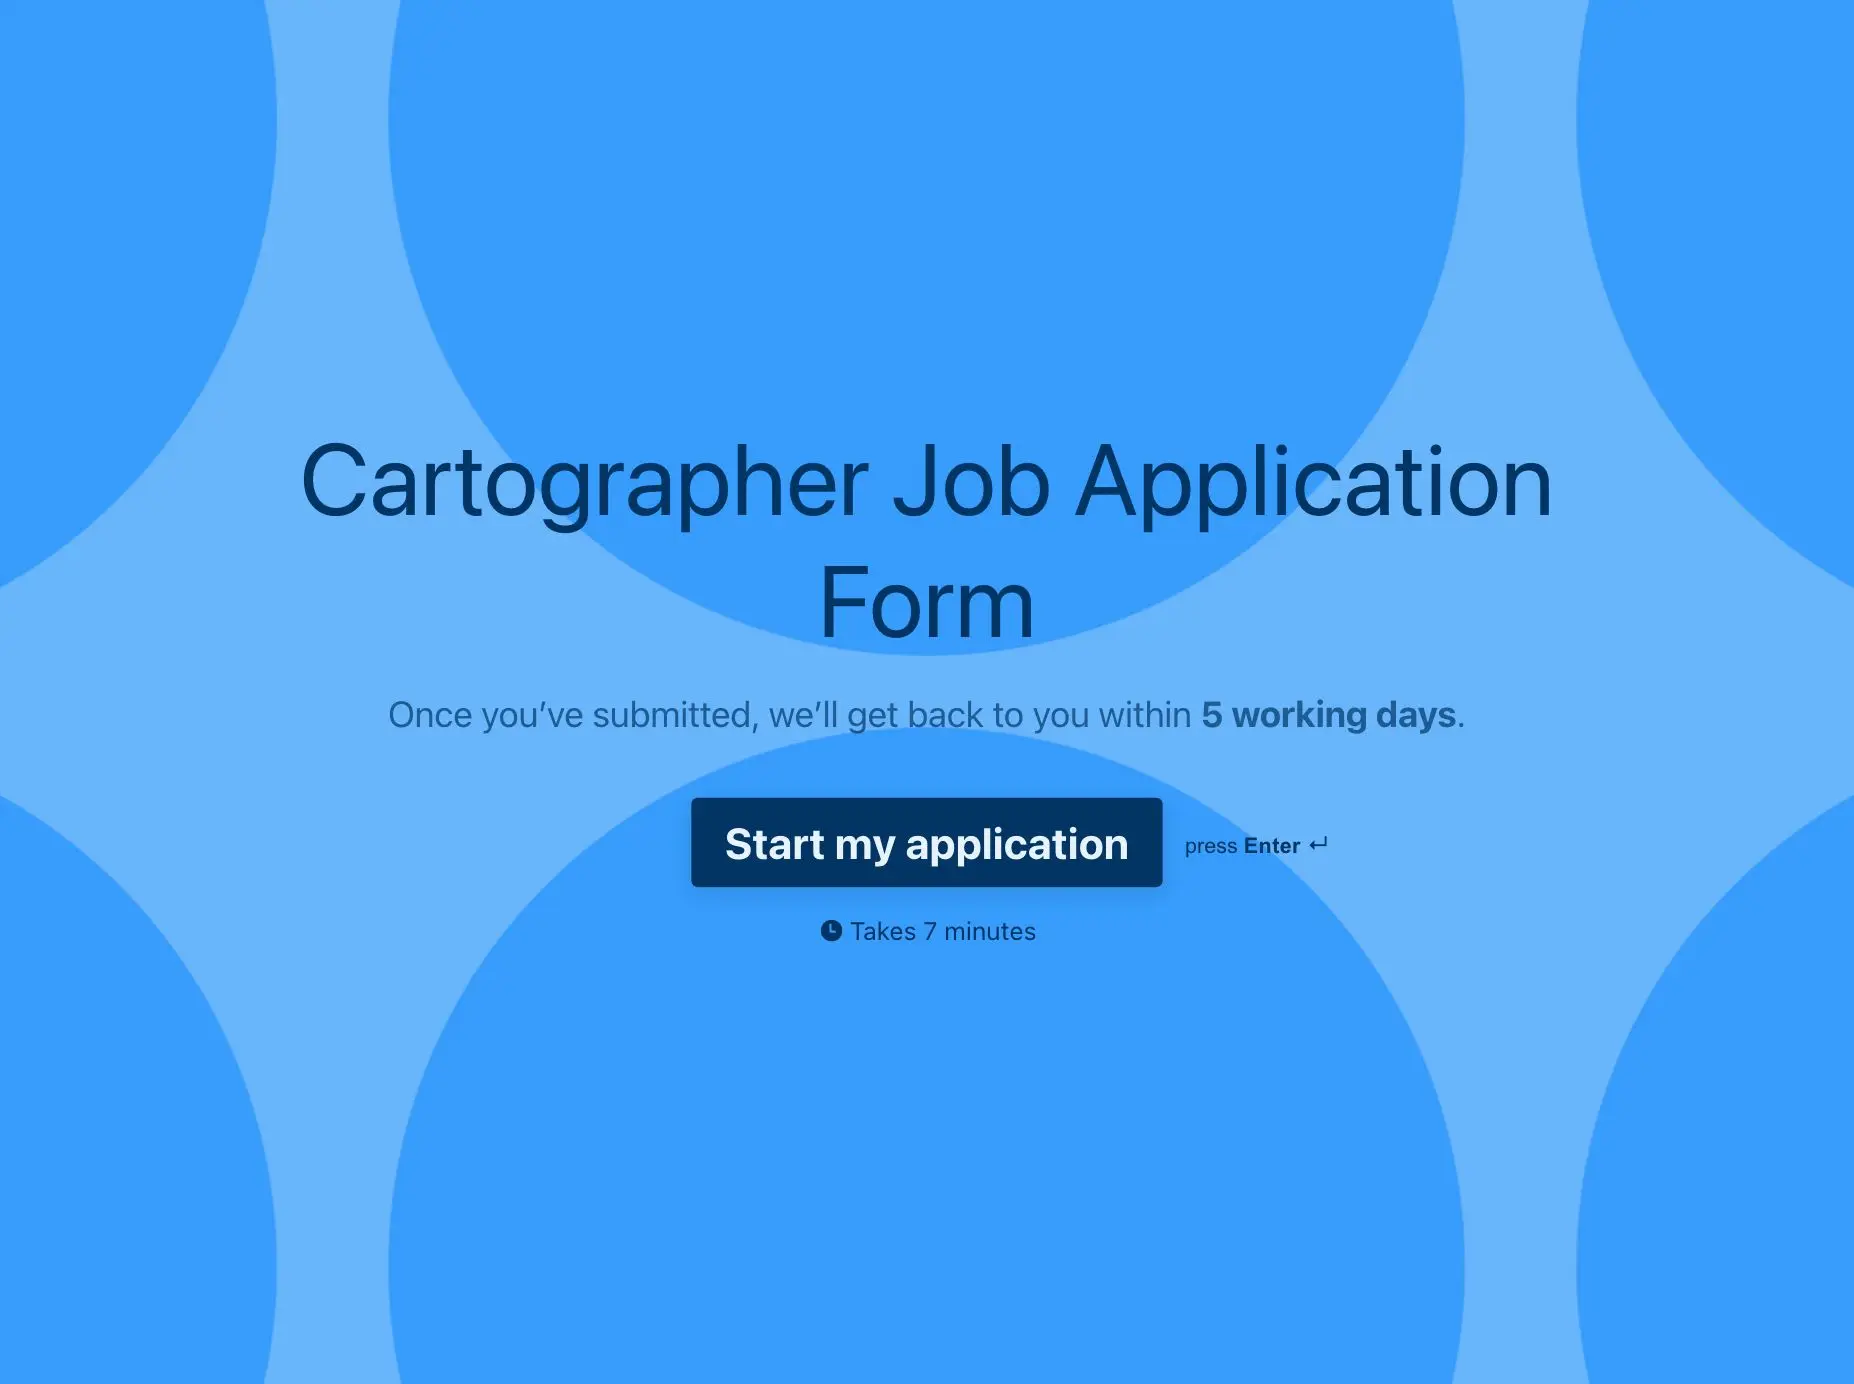 Cartographer Job Application Form Template Hero